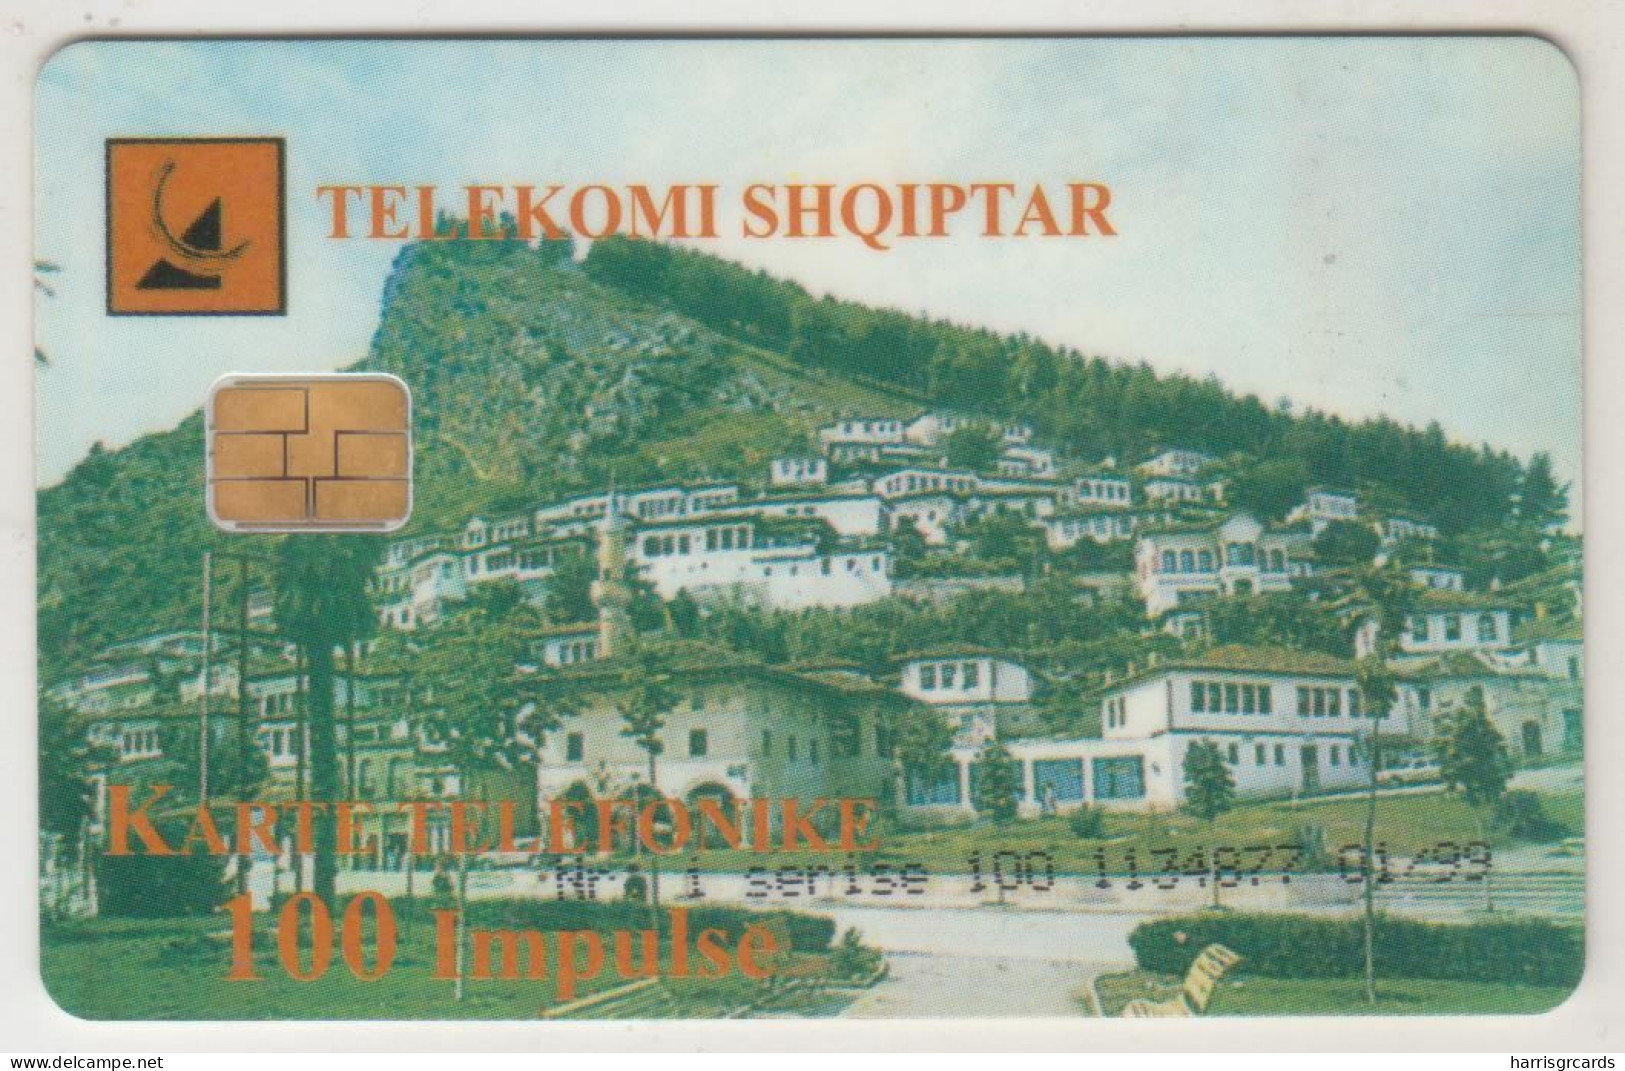 ALBANIA - Berat Unesco Traditional Heritage Town ,CN: Black, 01/99, Tirage 90.000, 100 U, Used - Albania